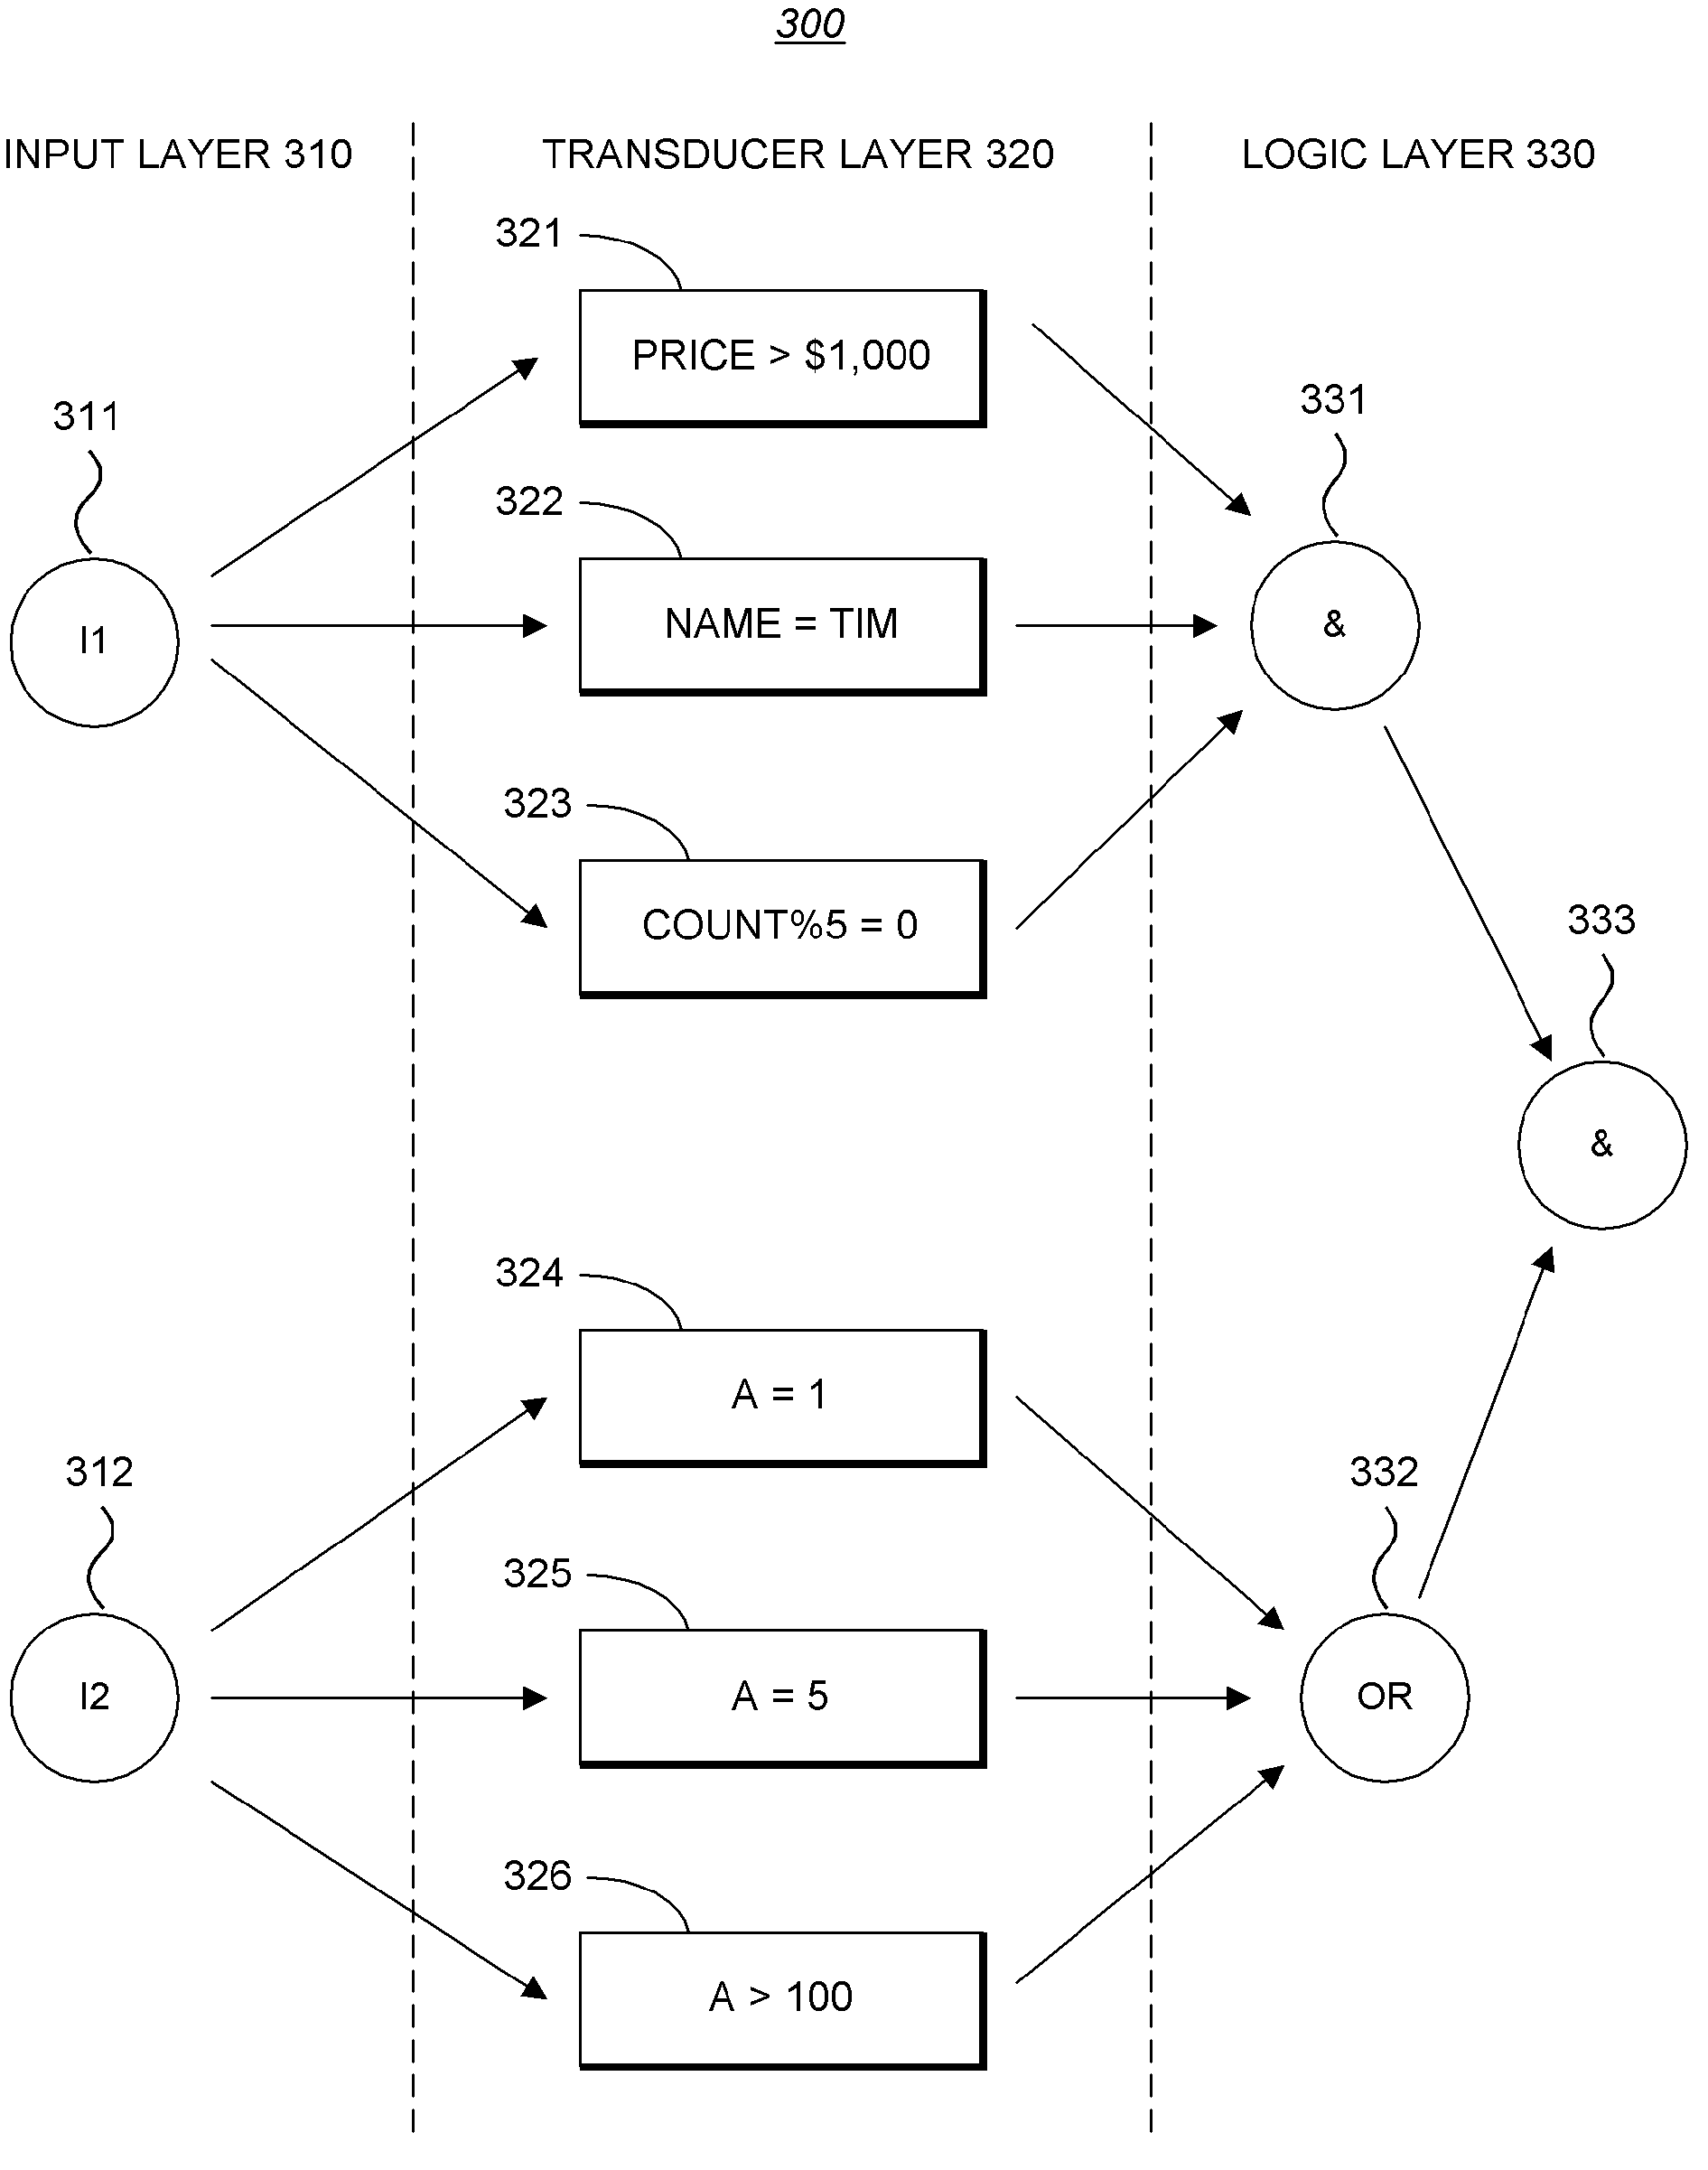 Boolean Network Rule Engine